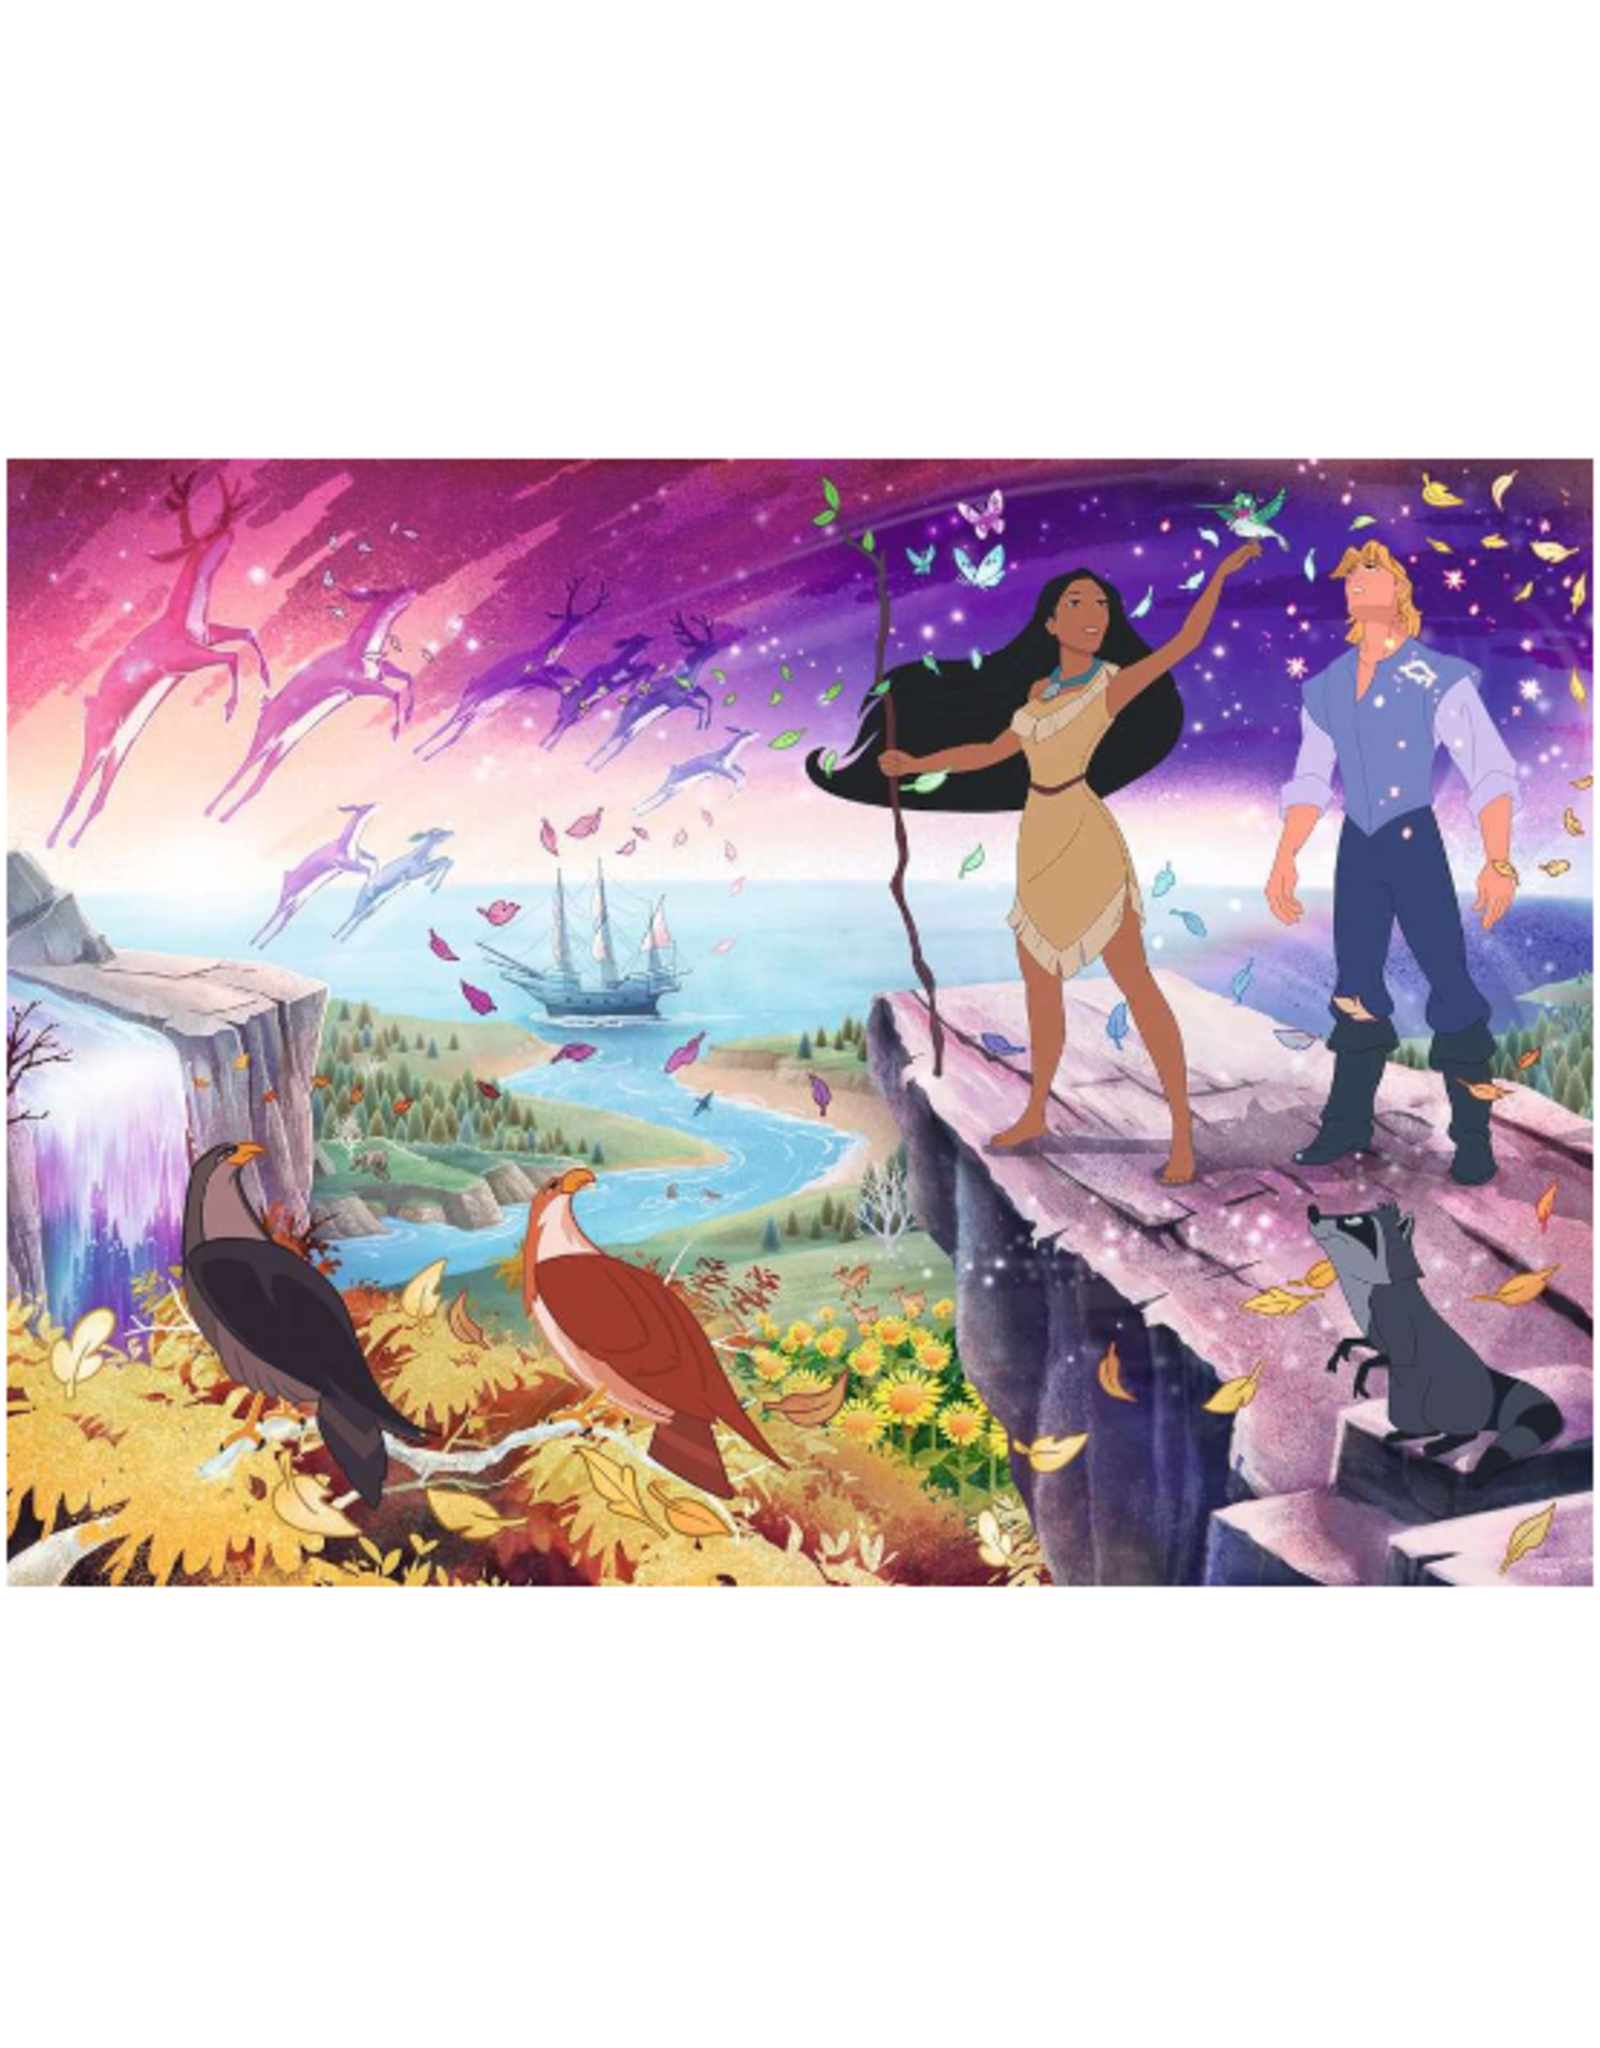 Ravensburger Ravensburger - 1000pcs - Disney Collectors Edition: Pocahontas